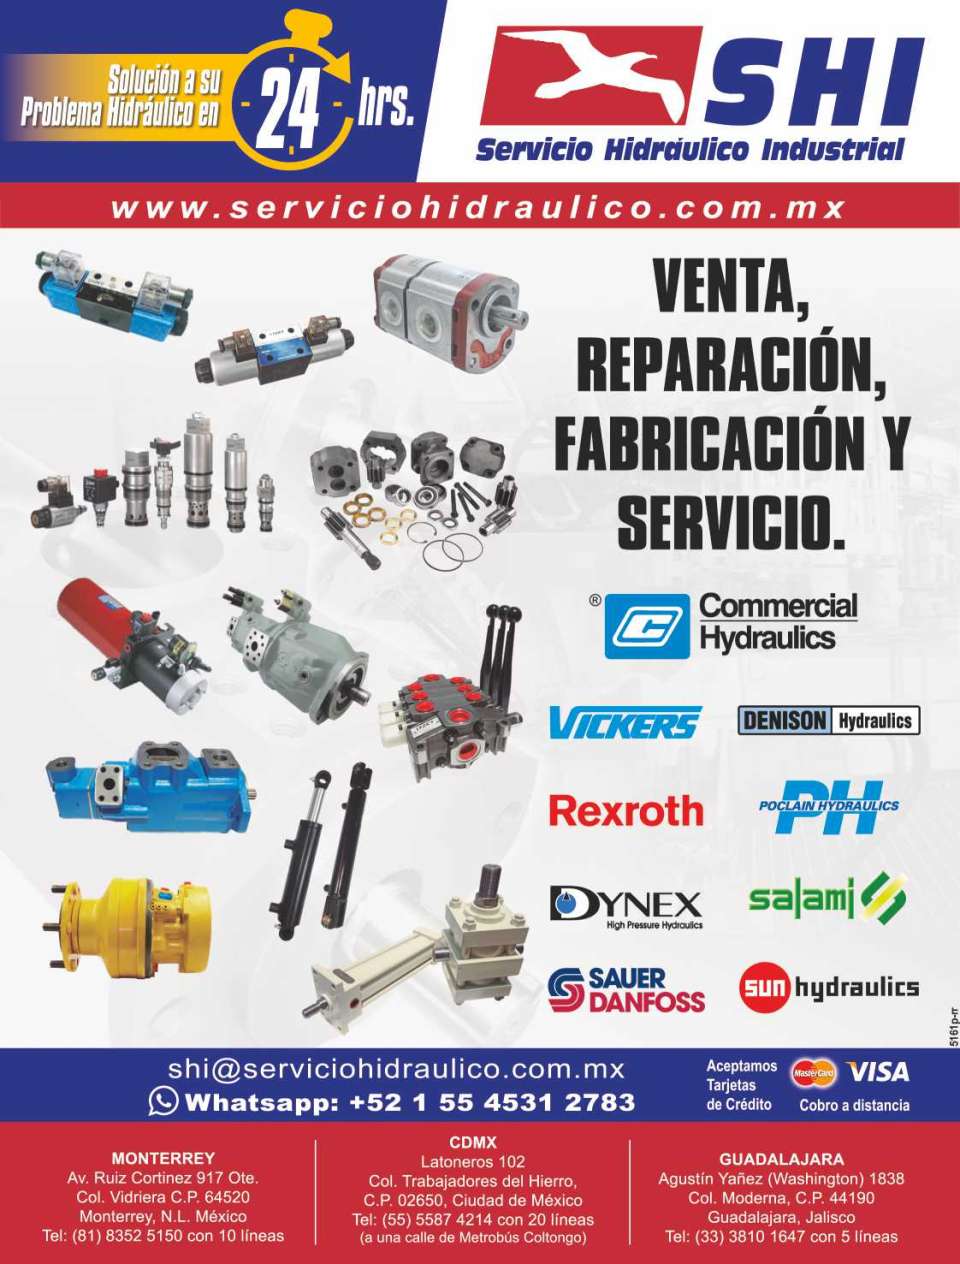 Solenoid valves, Vane pumps, gear pumps, filters. Sale, repair, service and manufacturing.